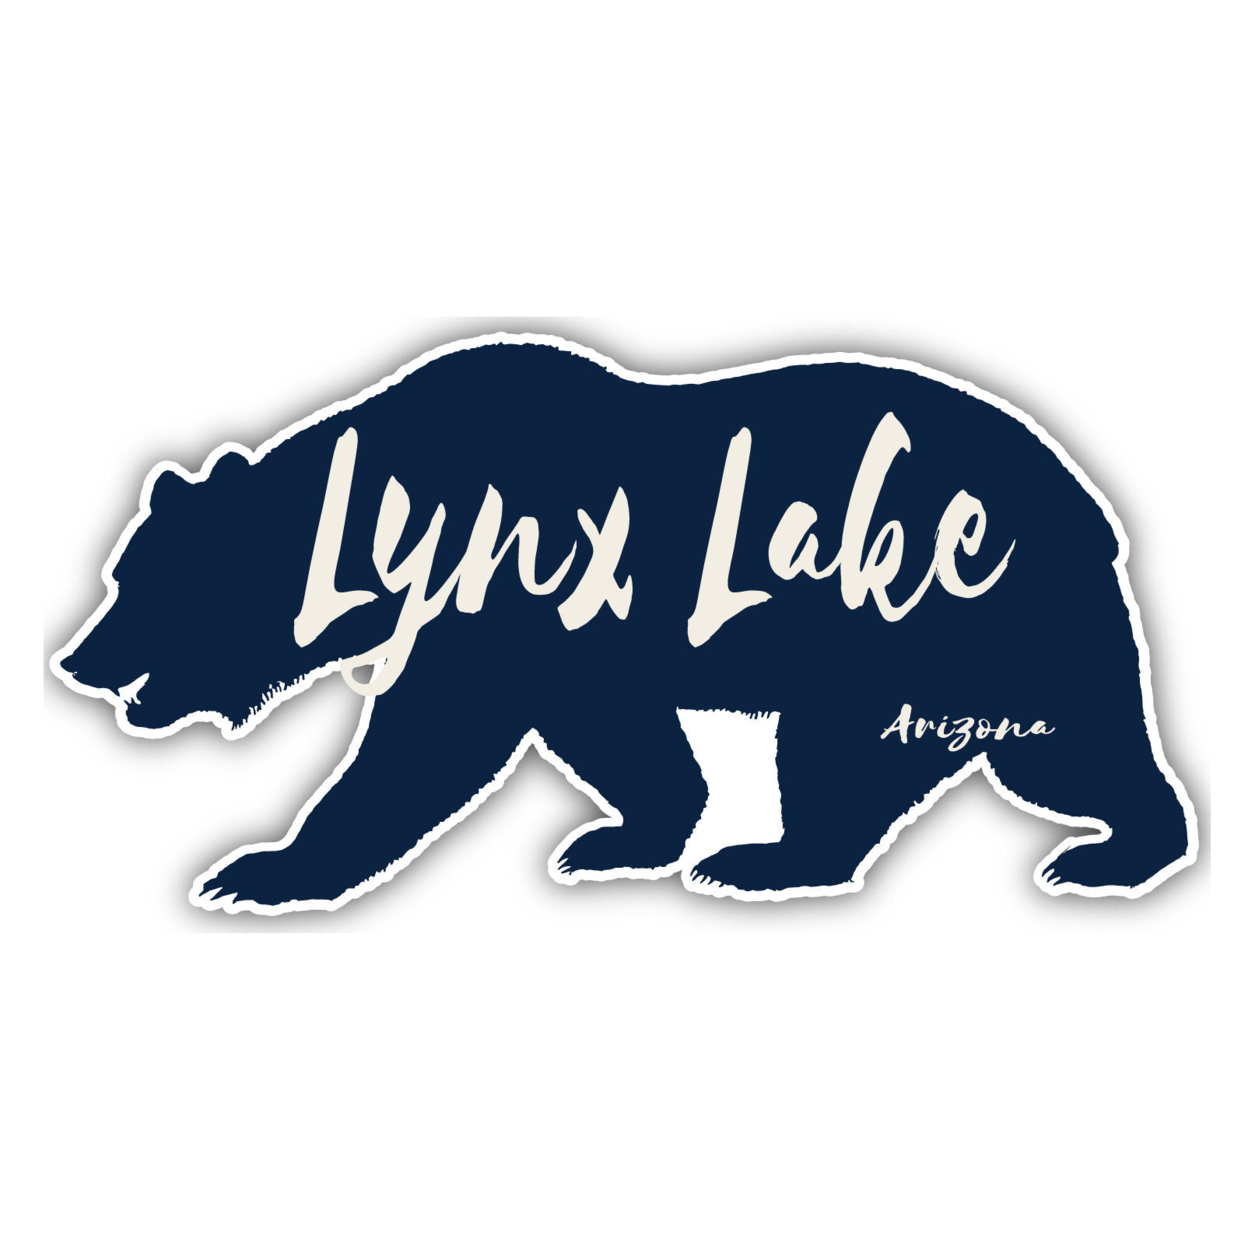 Lynx Lake Arizona Souvenir Decorative Stickers (Choose Theme And Size) - 4-Inch, Camp Life